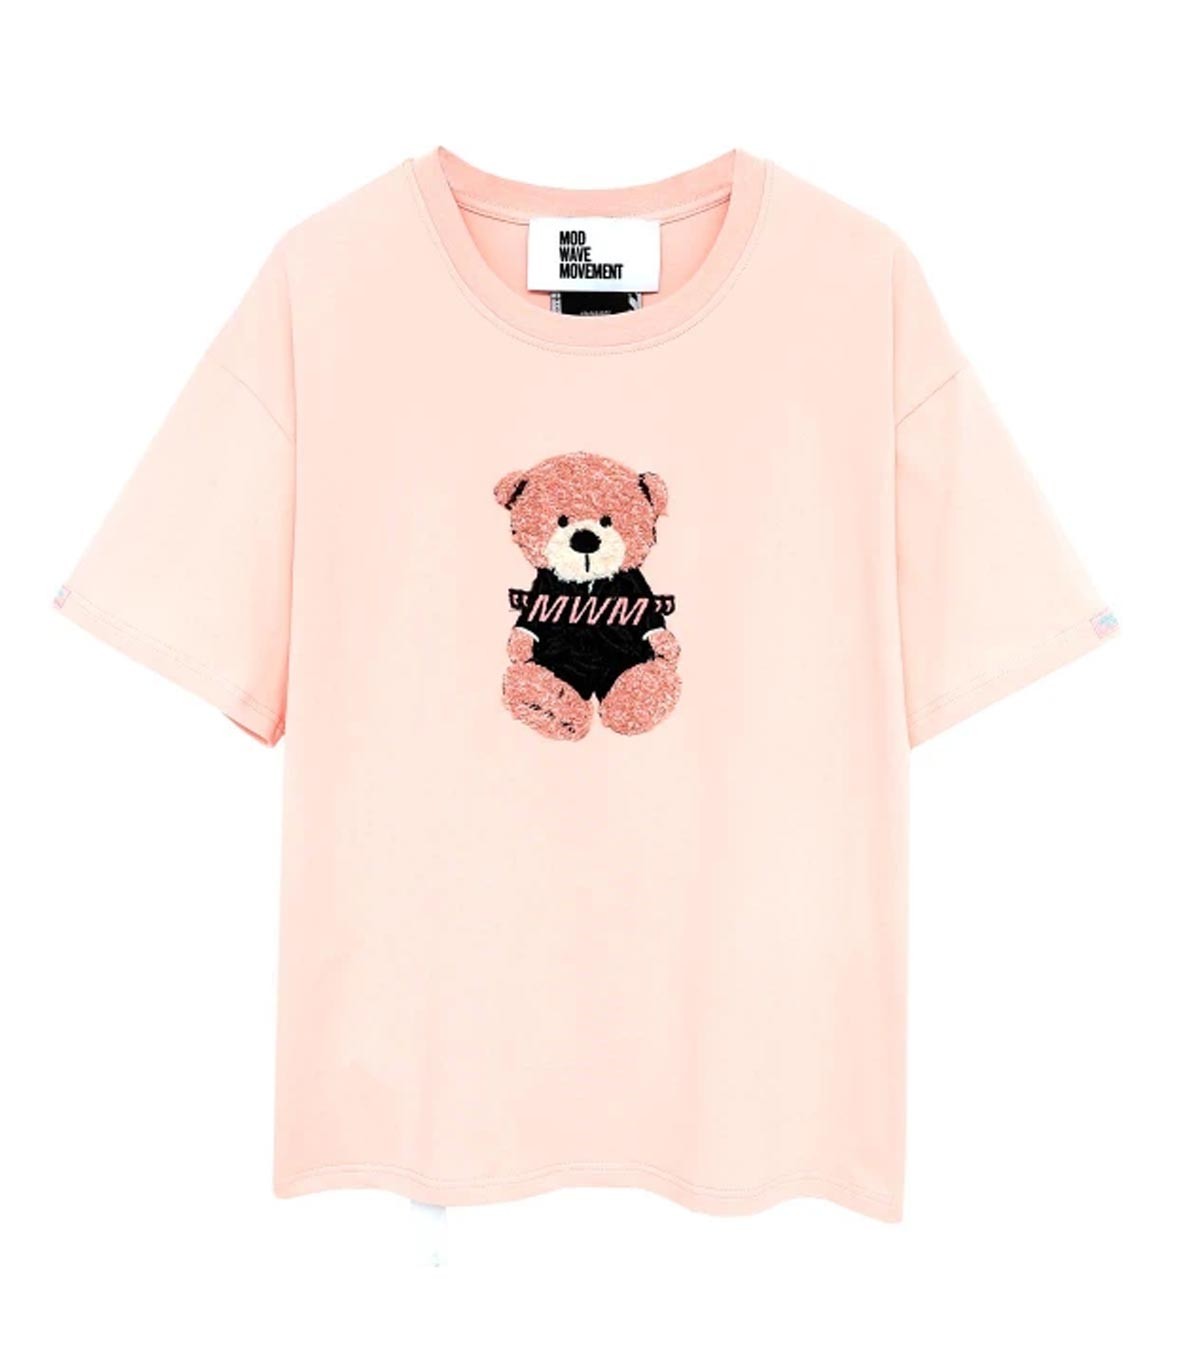 Mod Wave Movement - Camiseta - Rosa